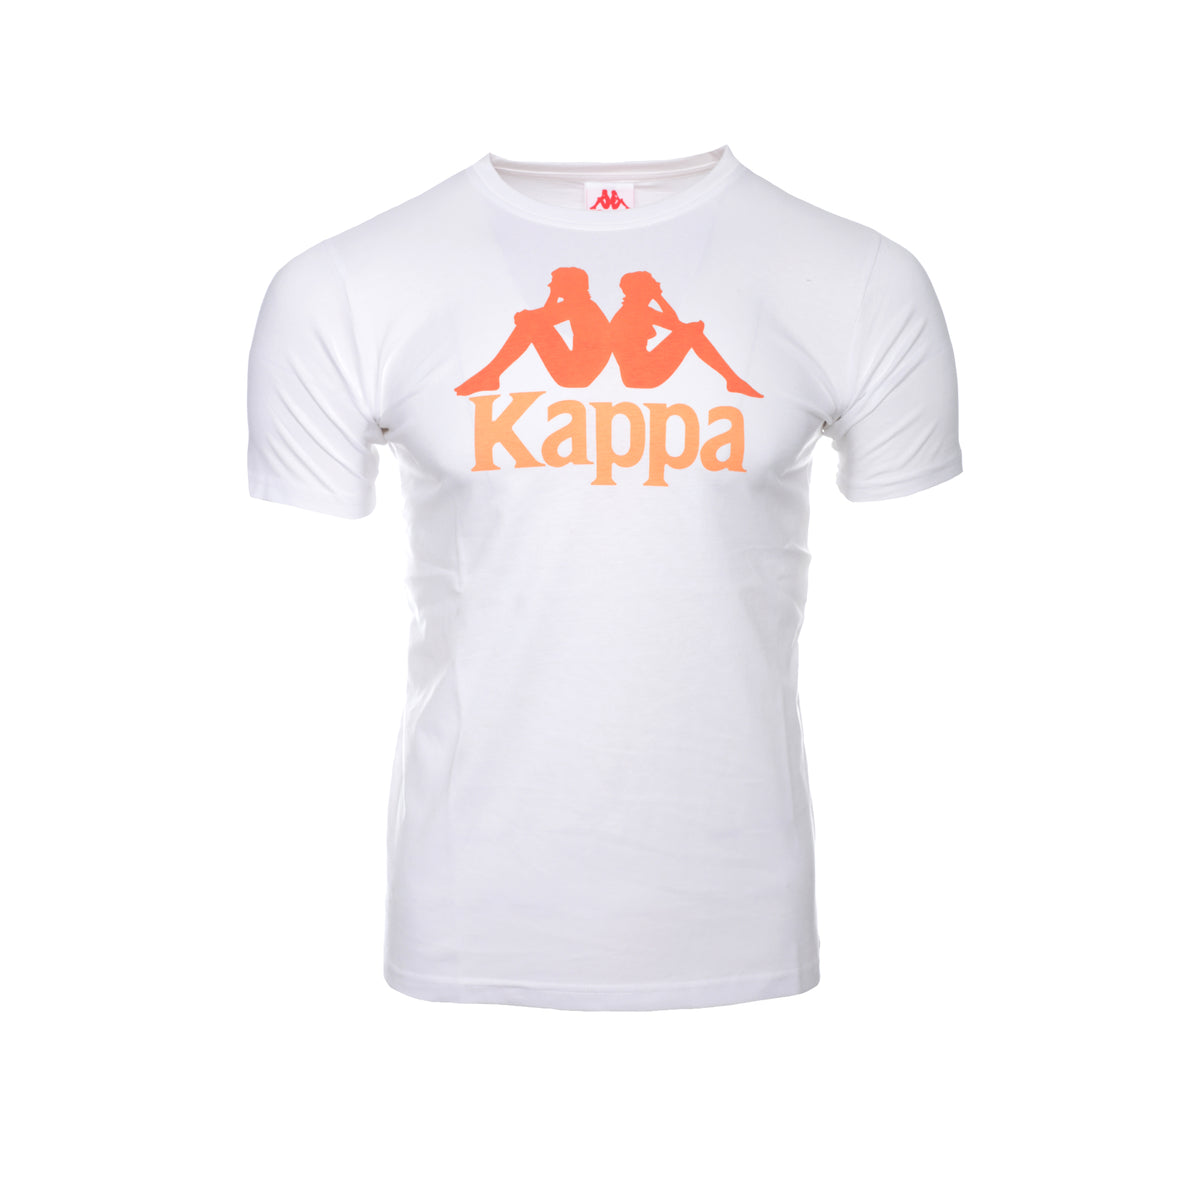  Kappa SS21 Authentic Estessi Men's Graphic Tee